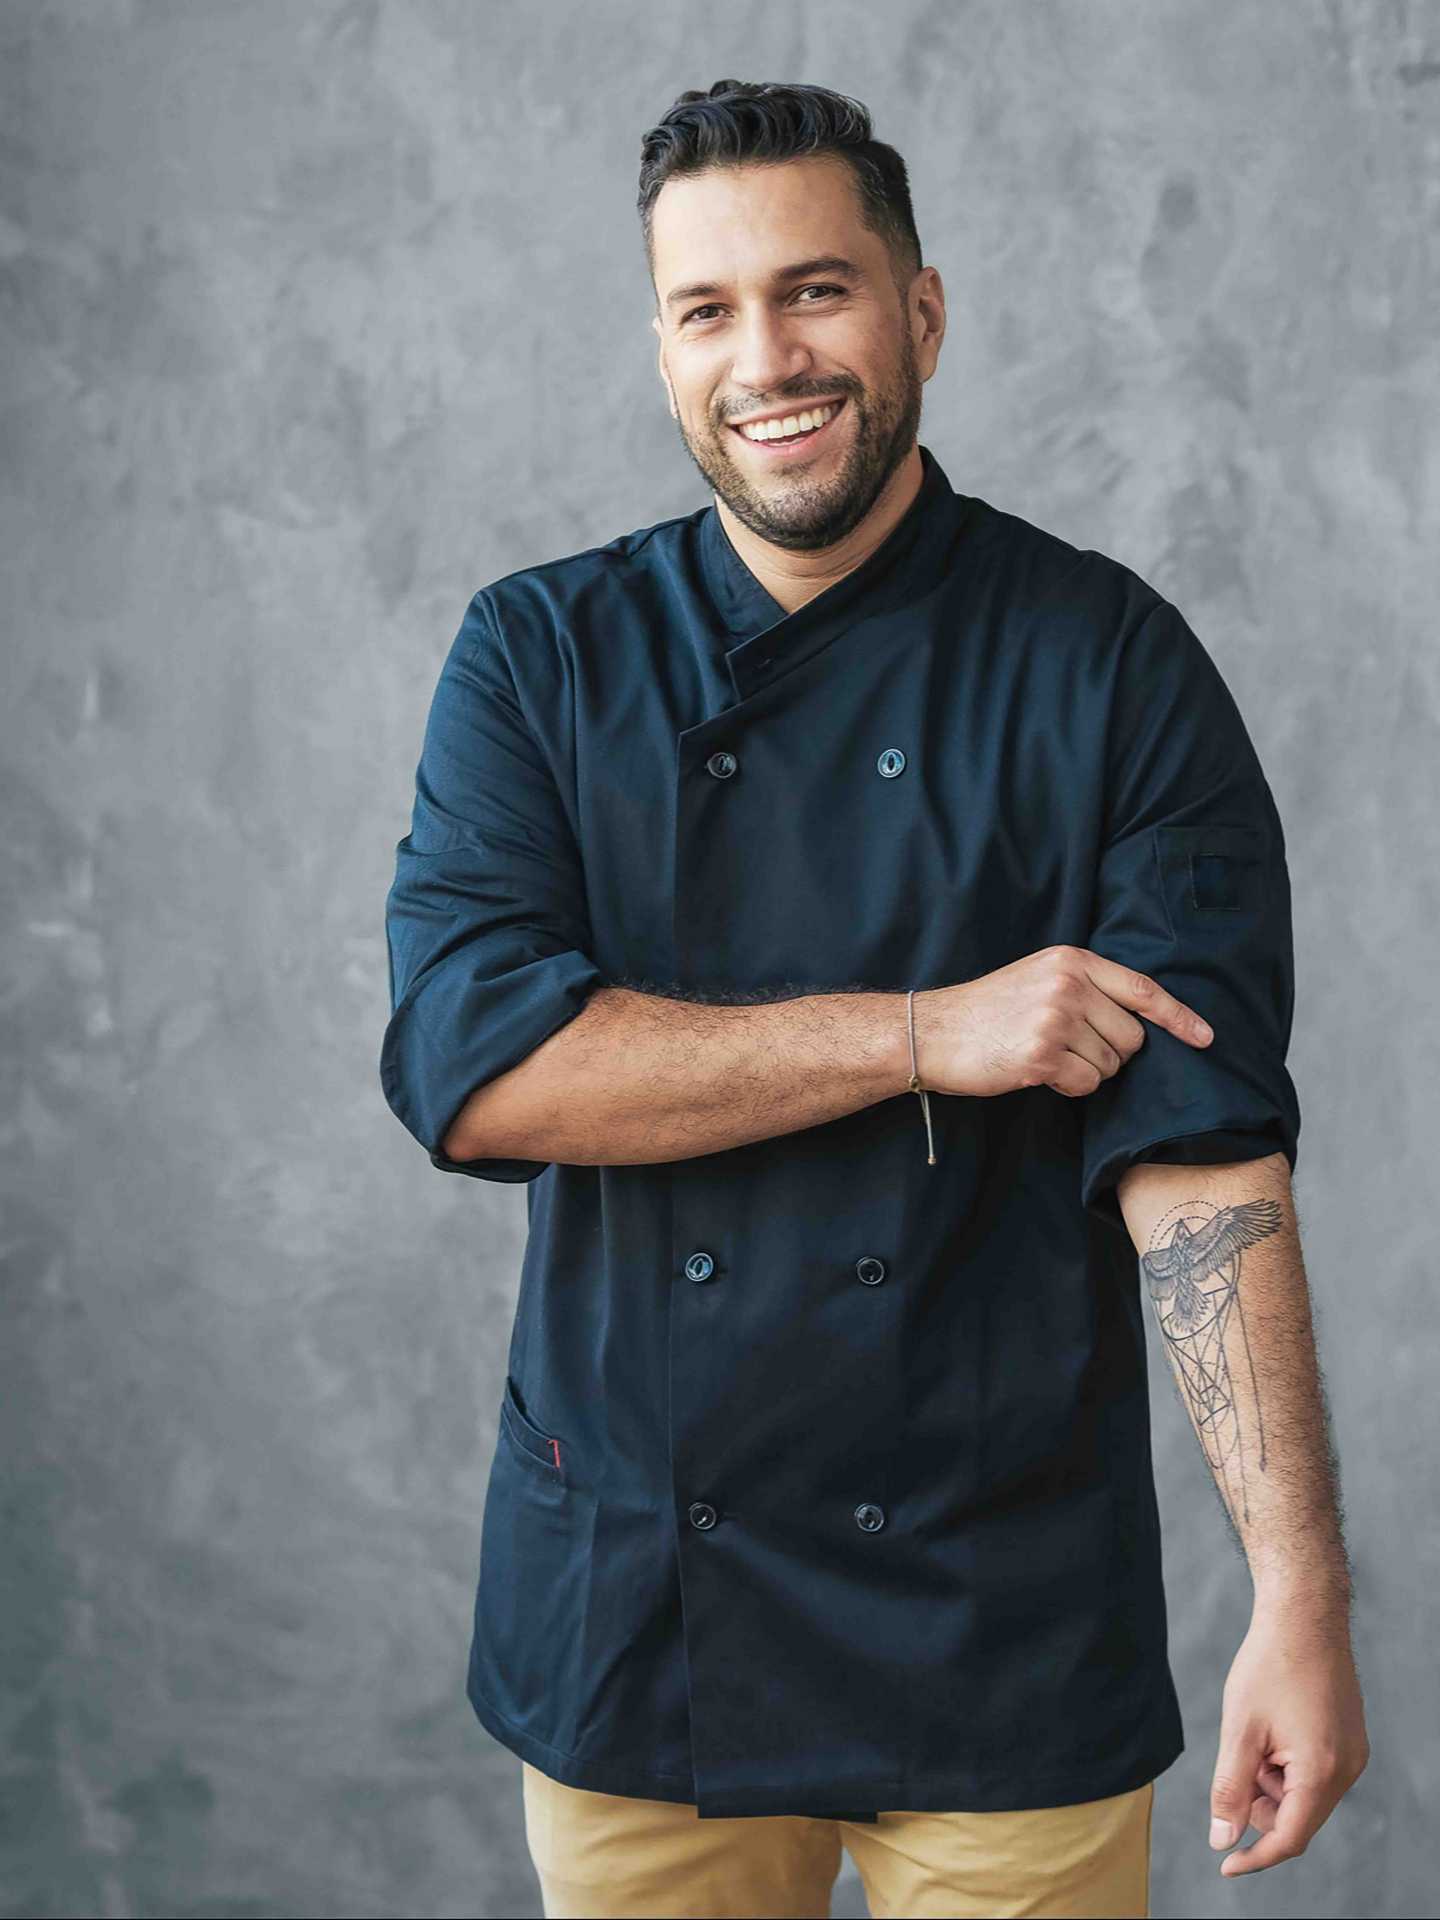 Vegan food in Toronto | Chef Iván Castro rolling up his sleeve